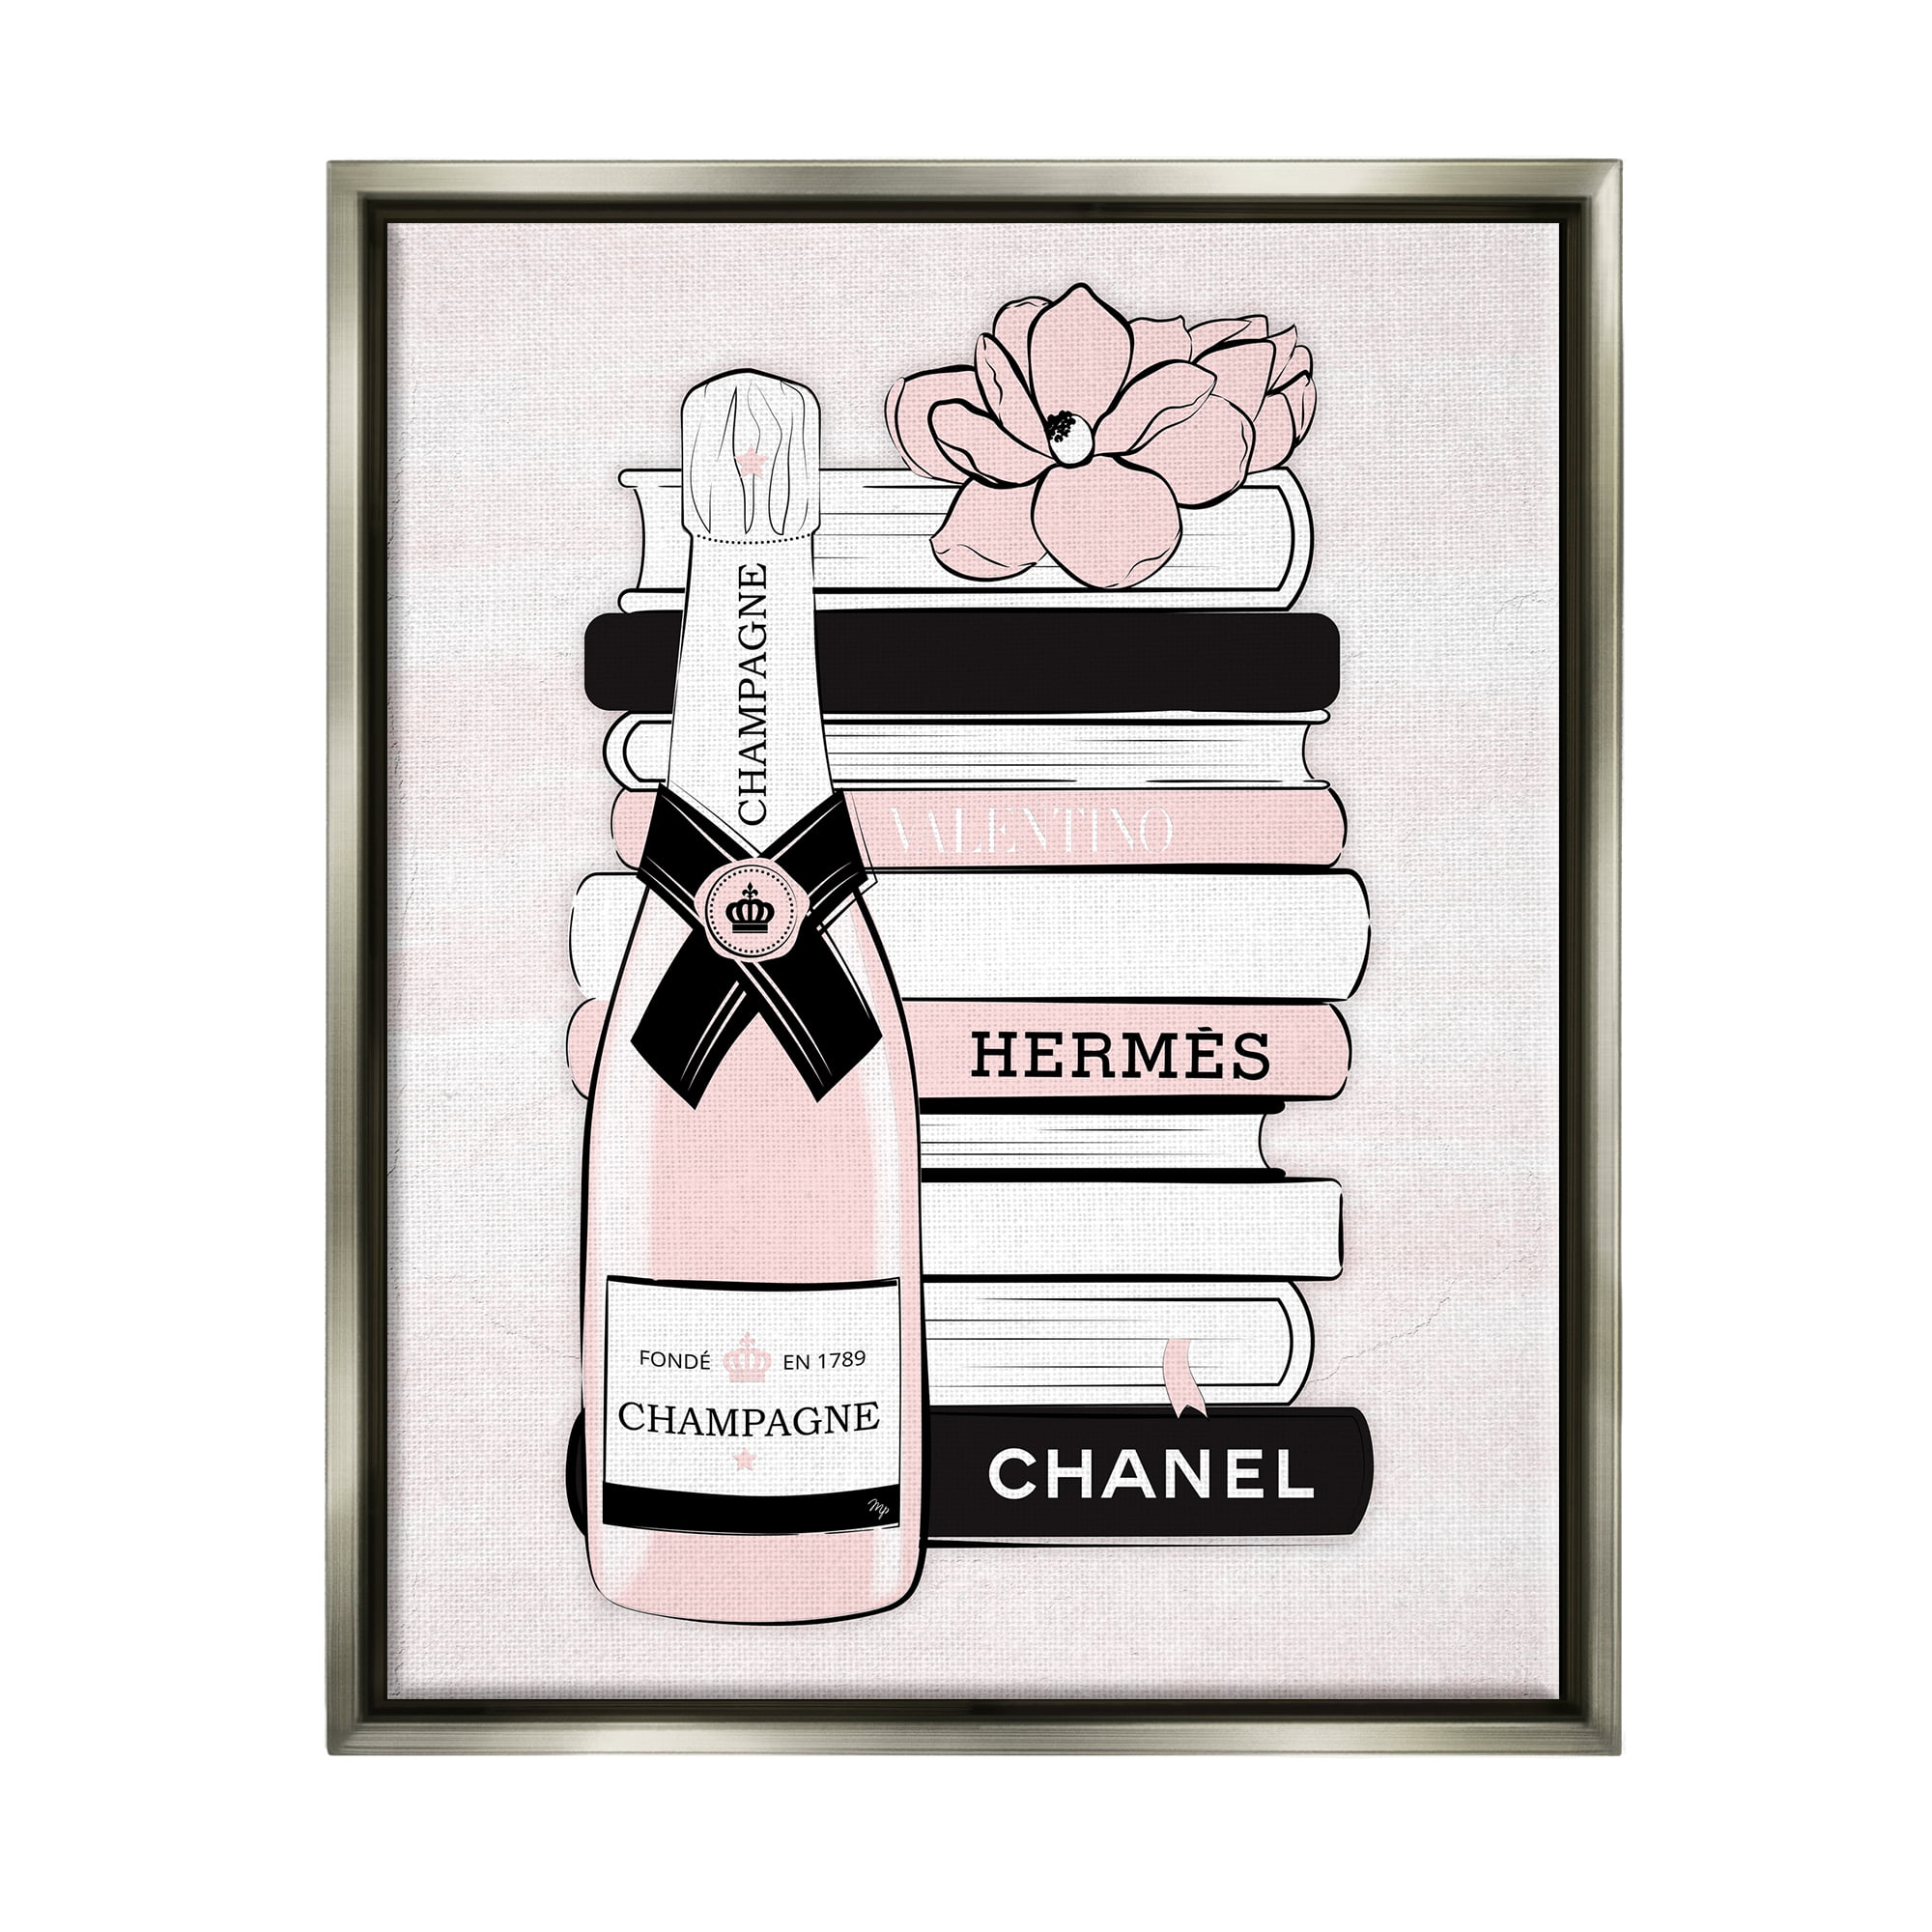 Chanel Drink Gray Art Print by Martina Pavlova, iCanvas